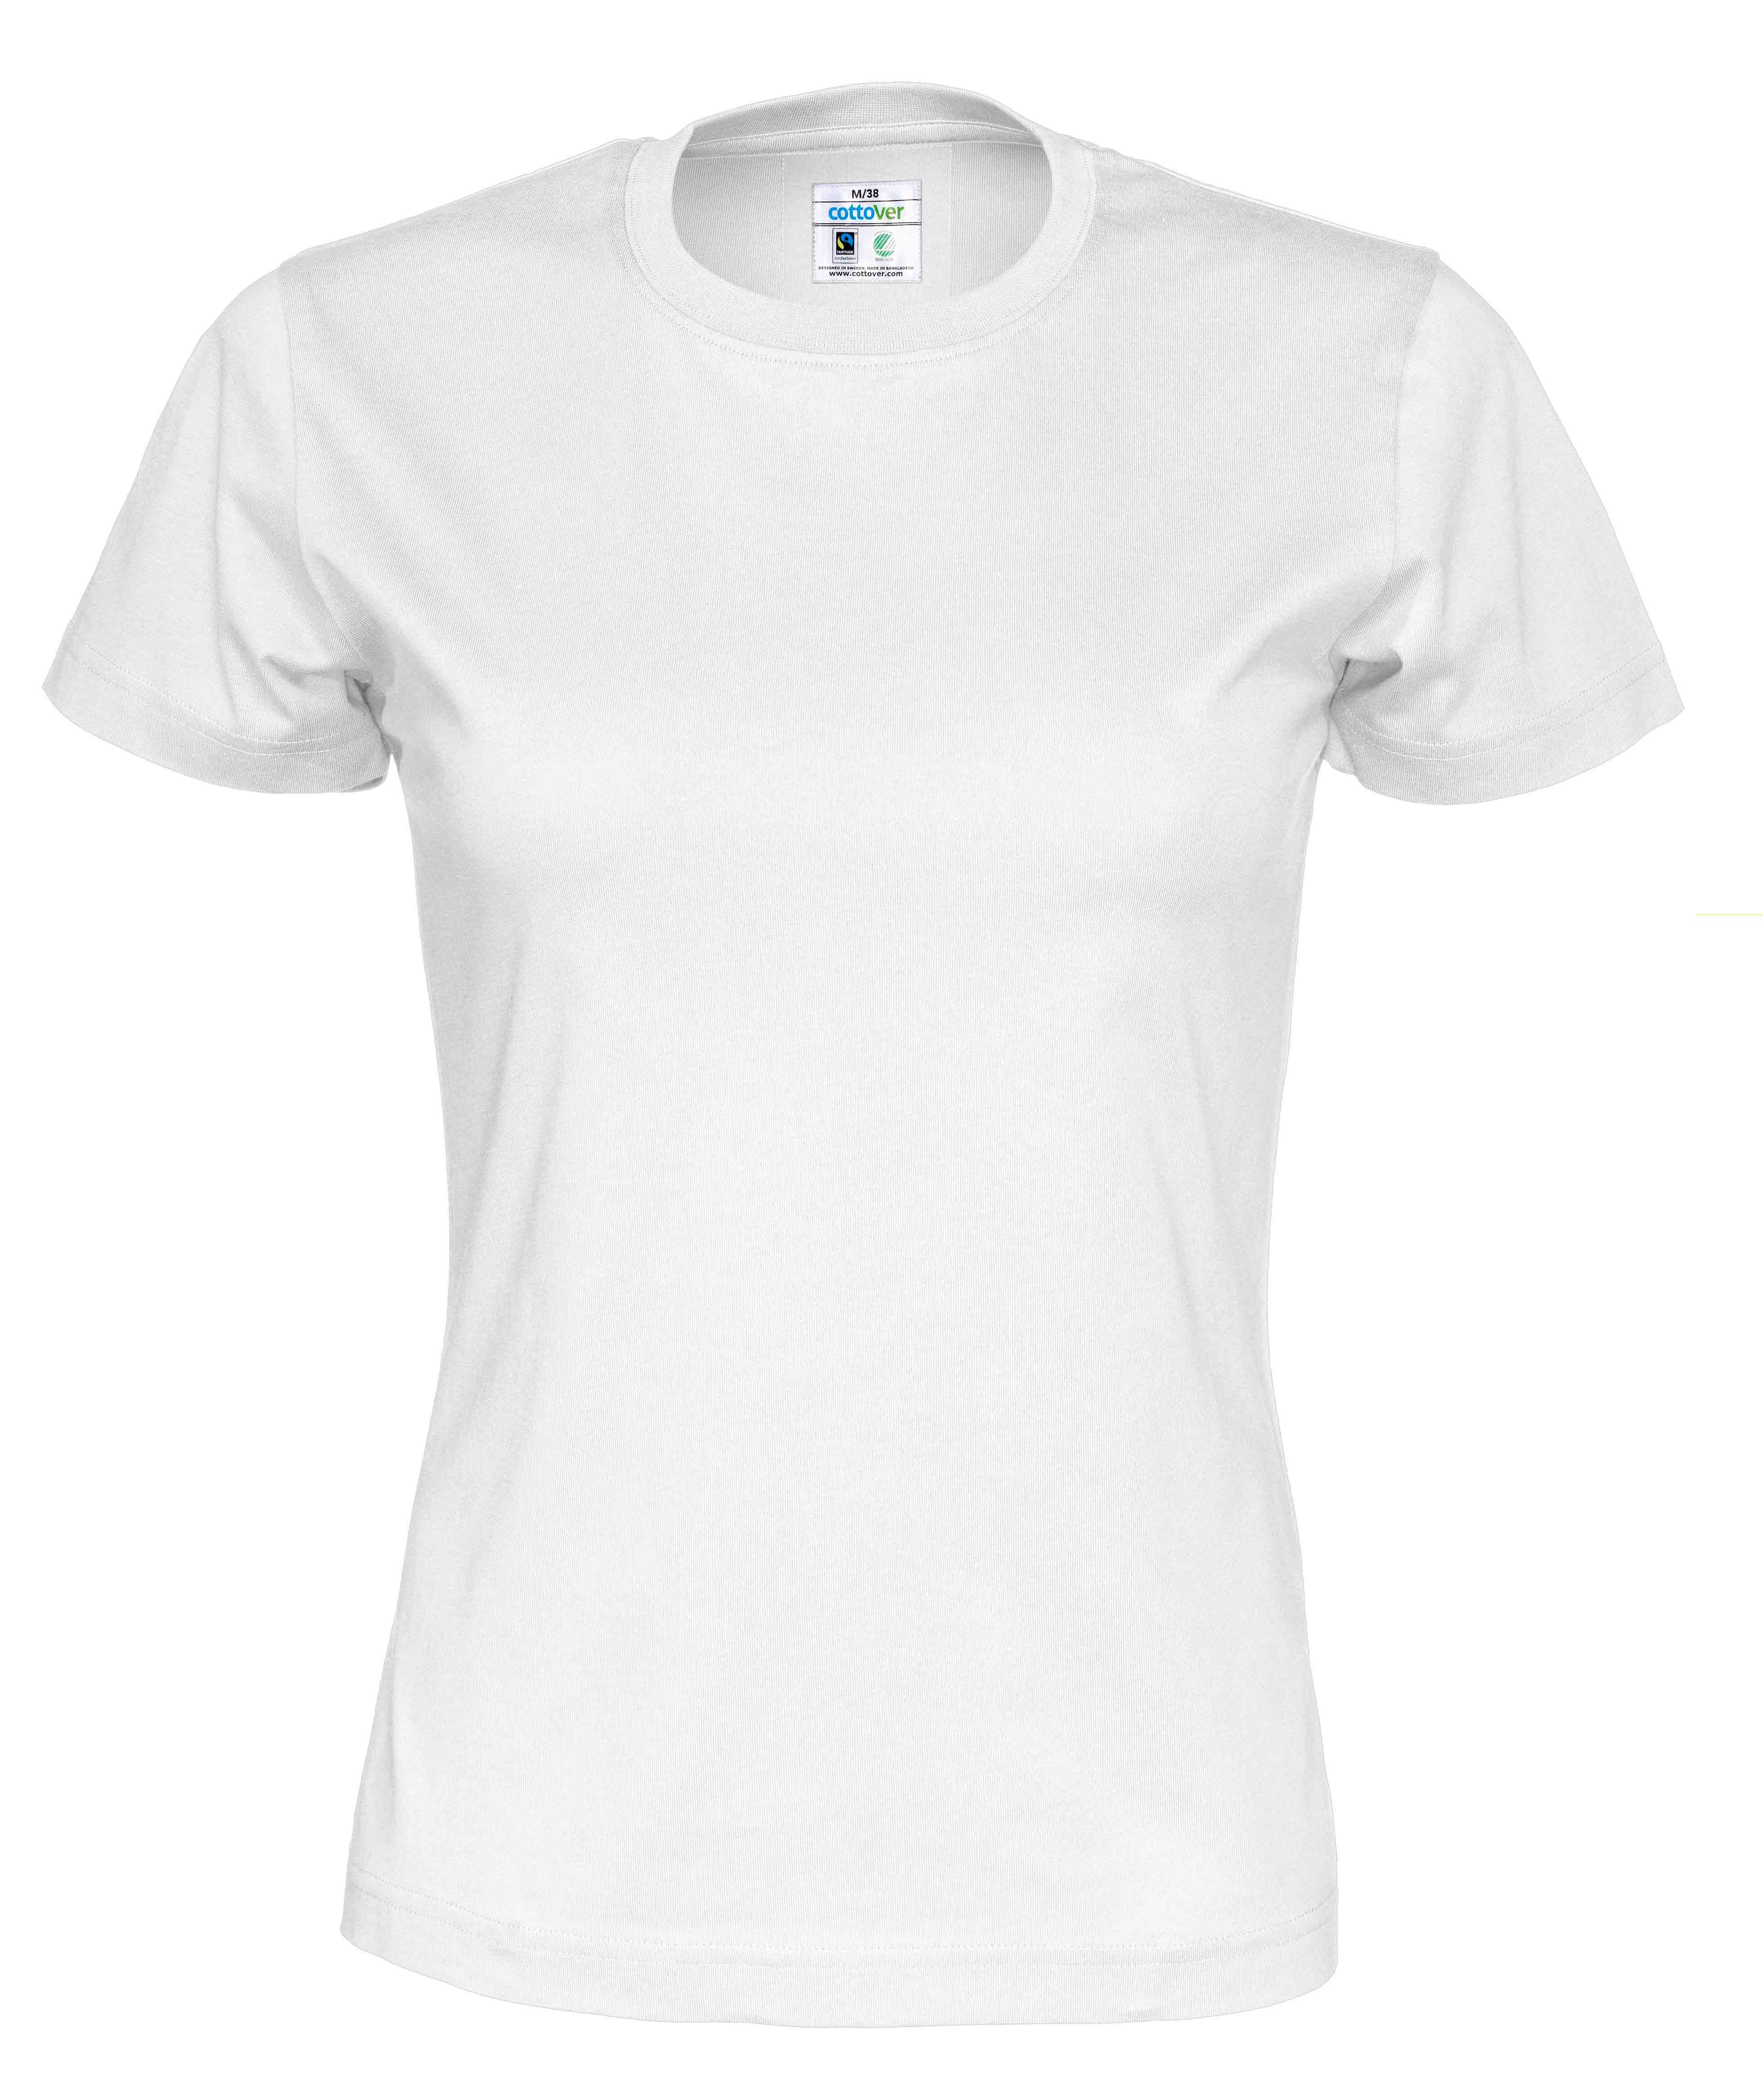 T-shirt Lady White